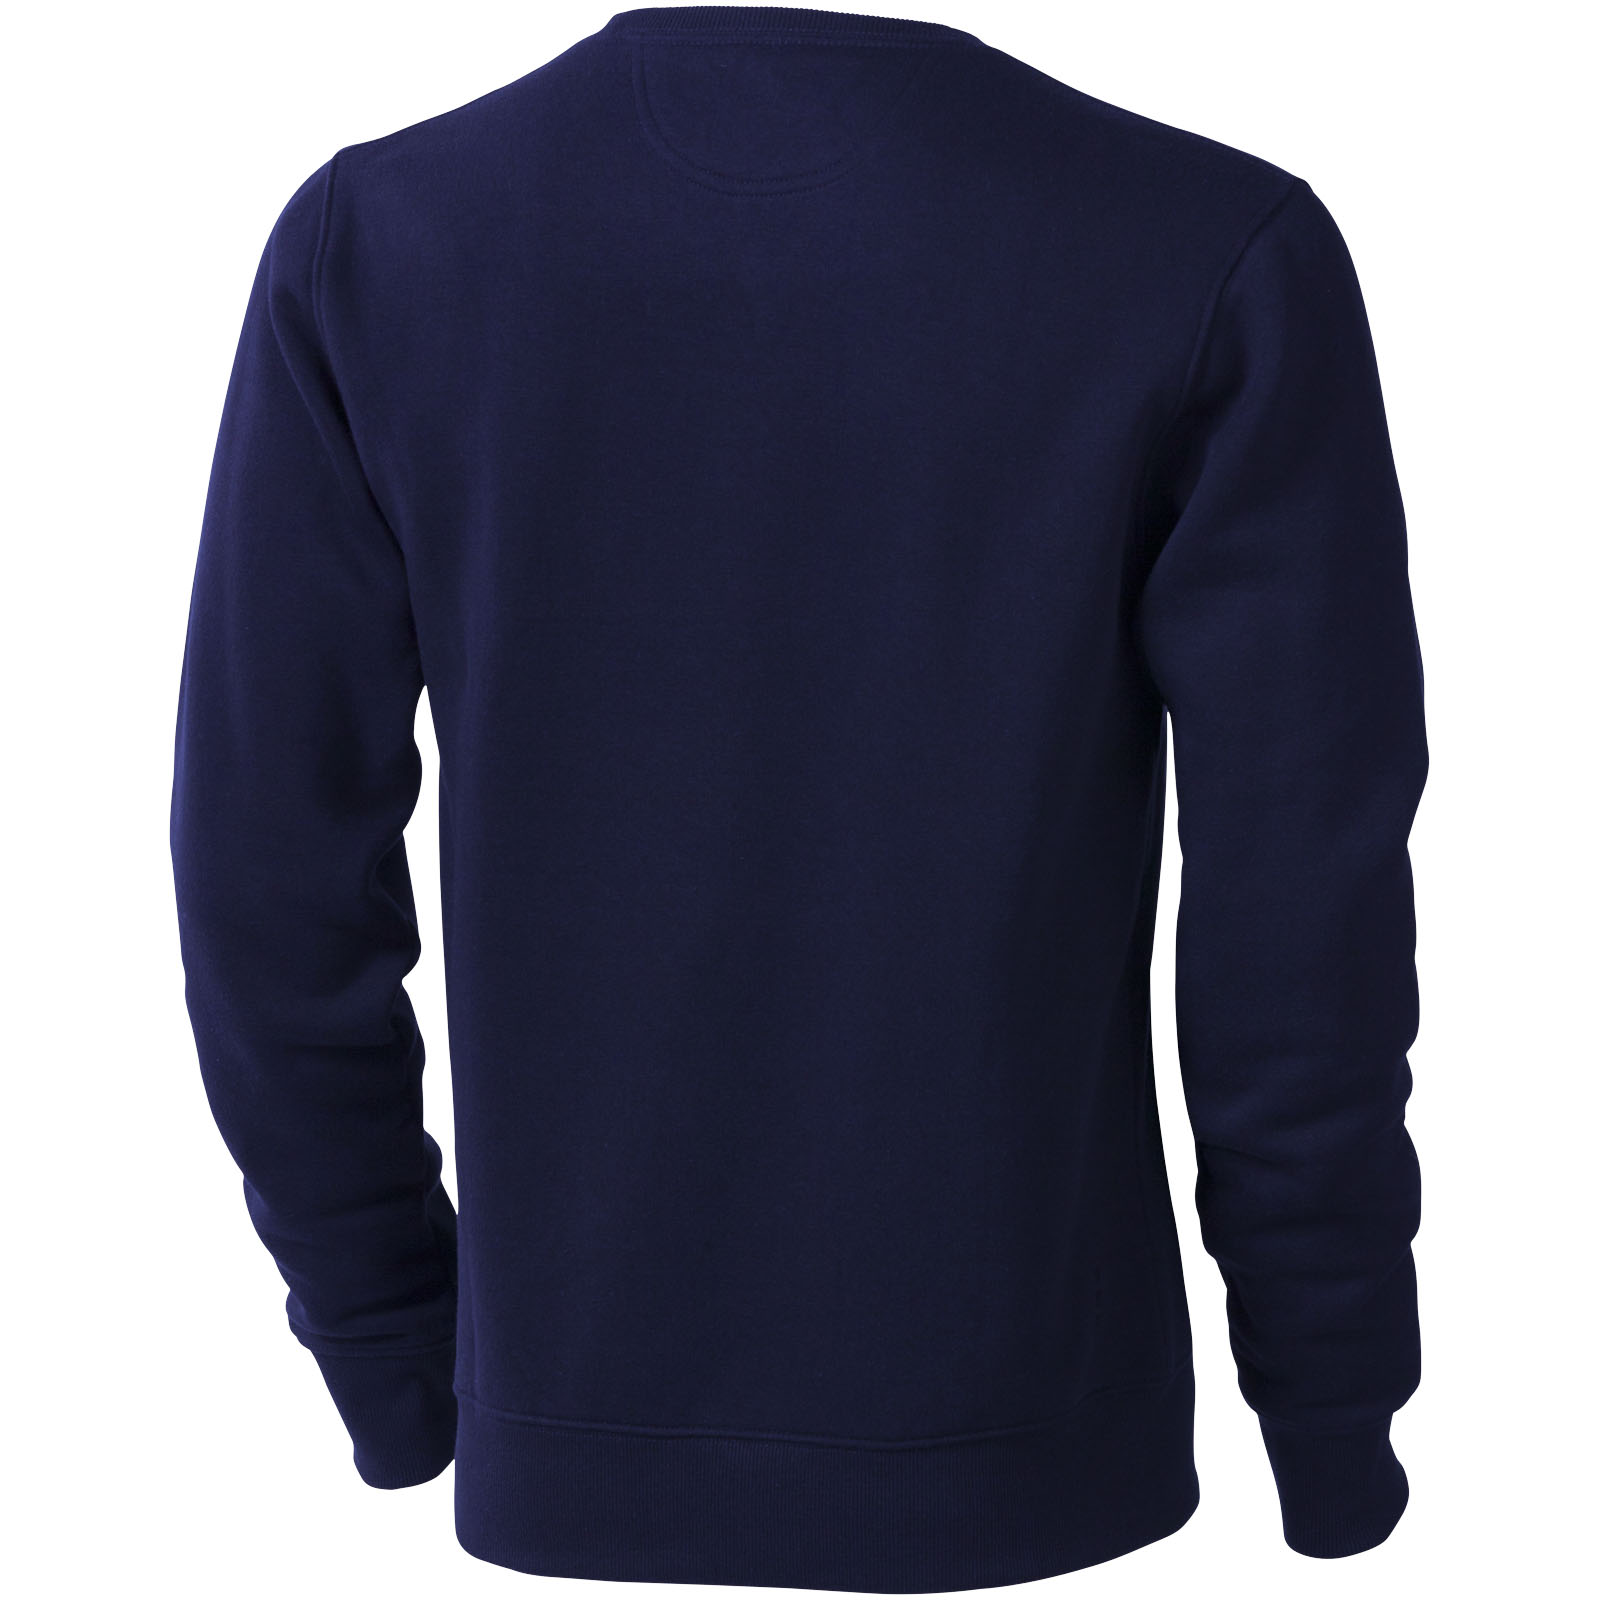 Advertising Sweaters - Surrey unisex crewneck sweater - 1